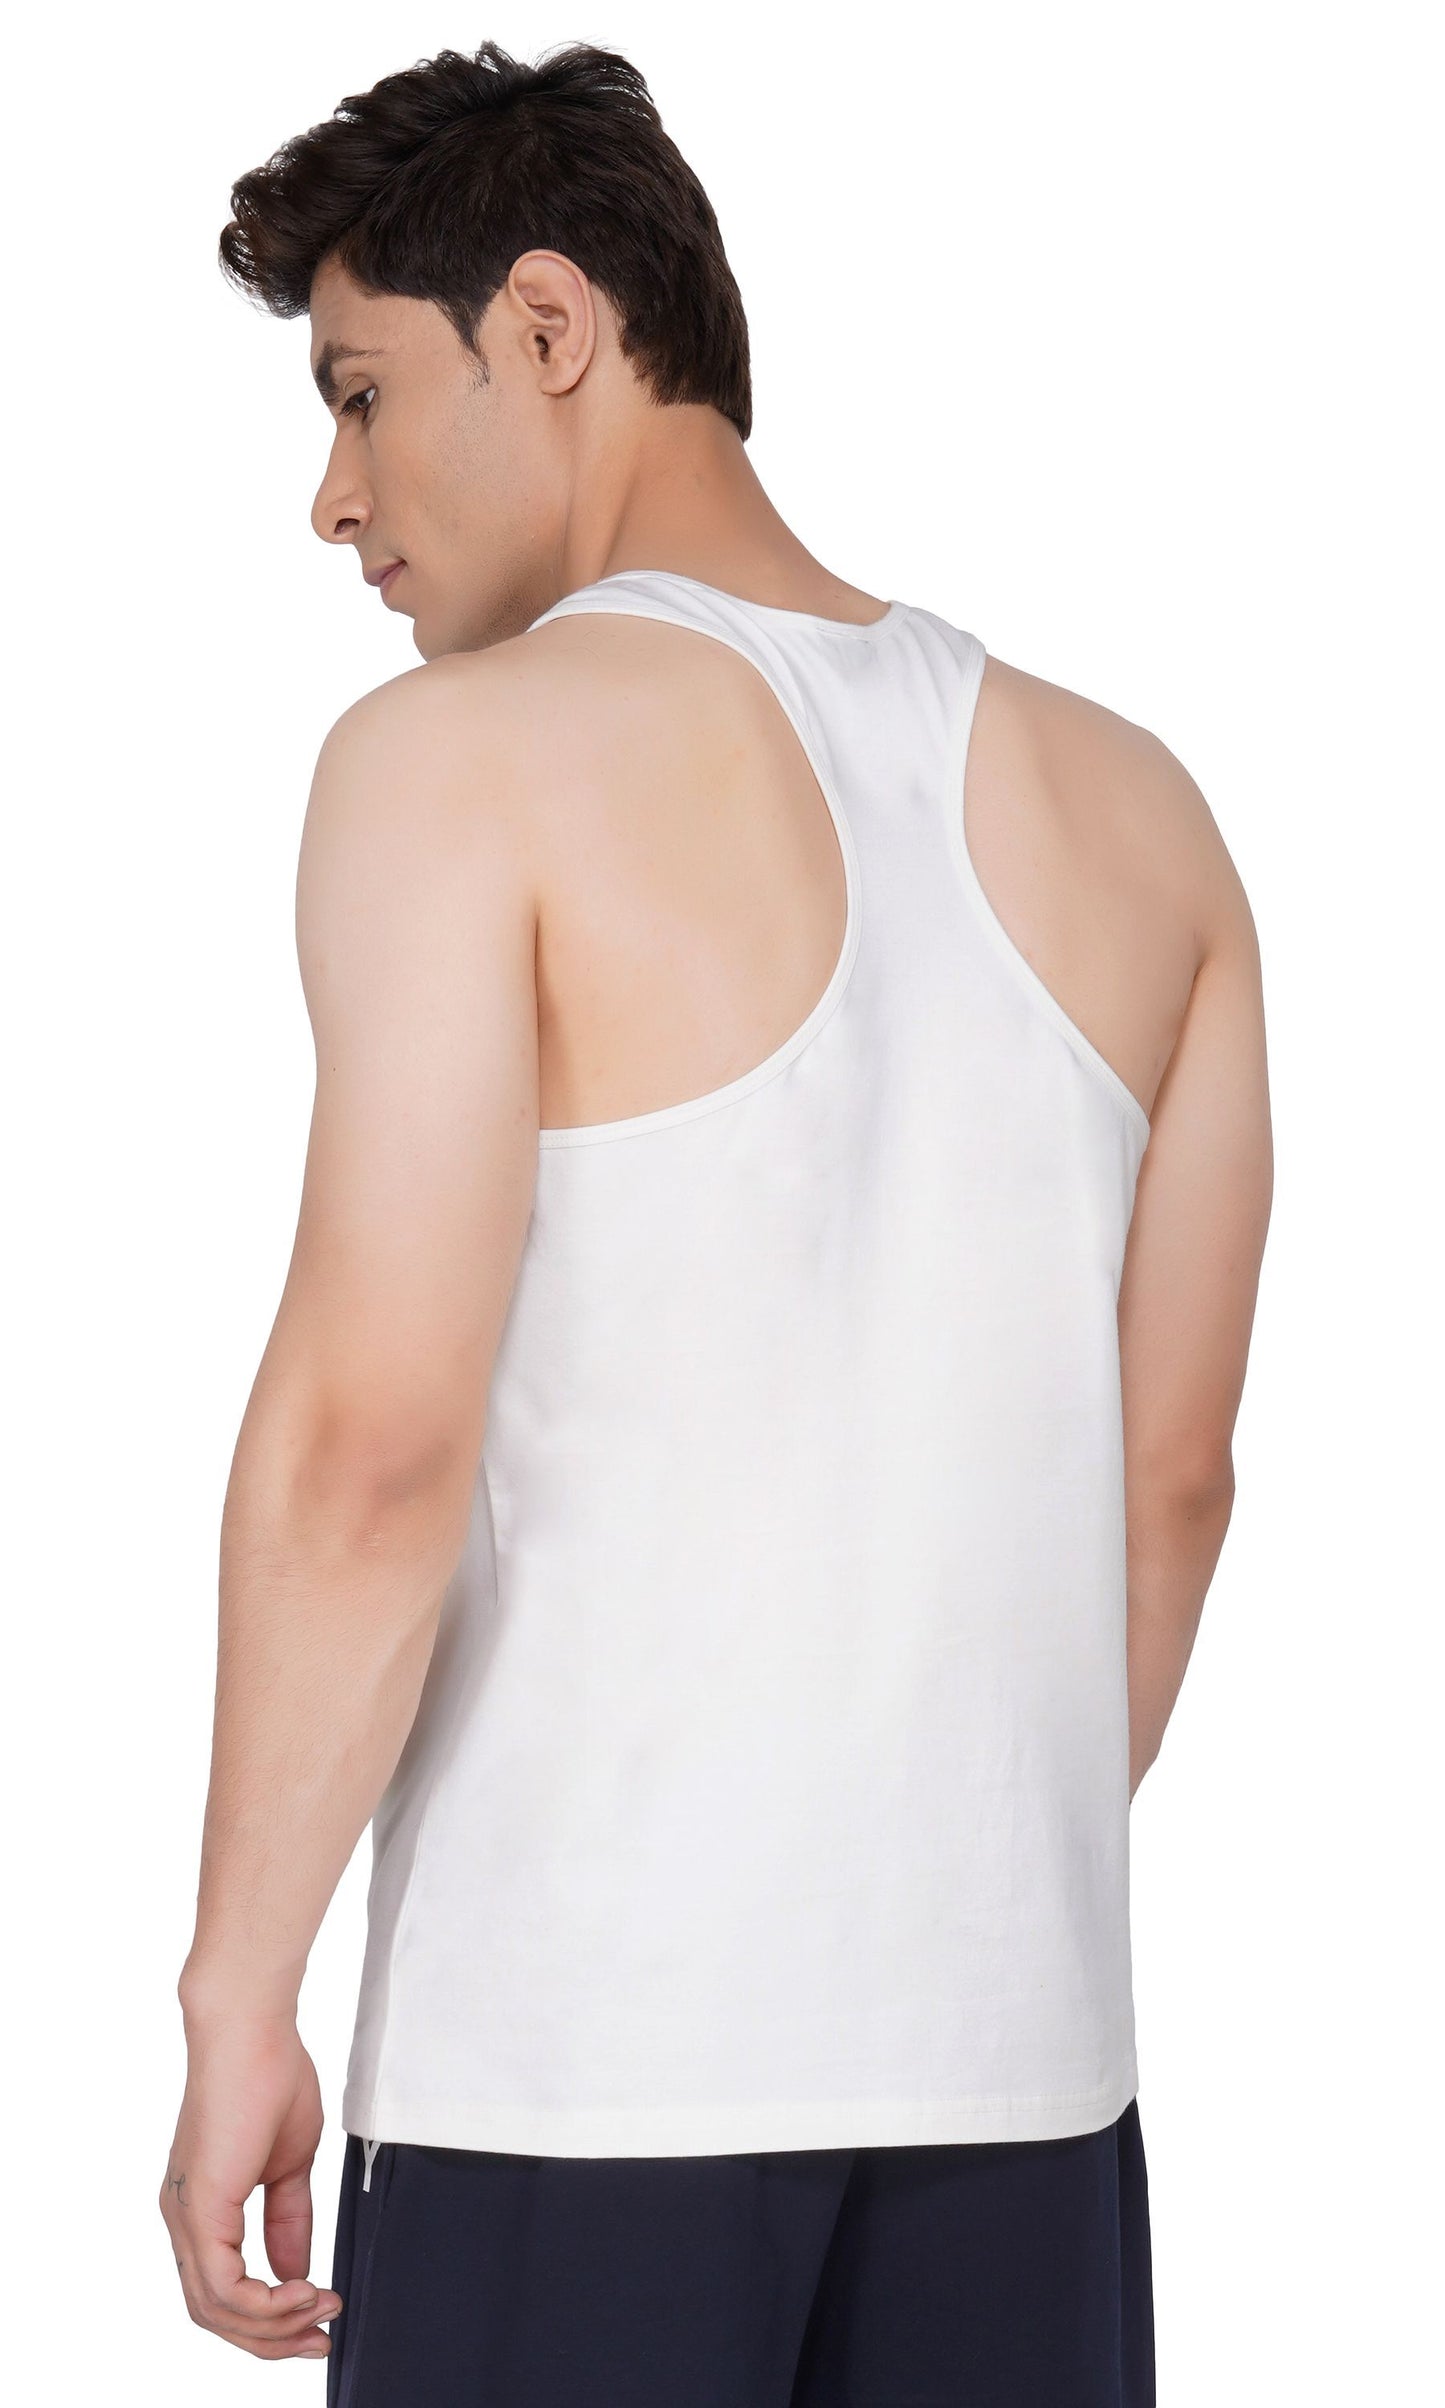 SLAY. Men's BALLER Edition Printed Gym Vest-clothing-to-slay.myshopify.com-Vest